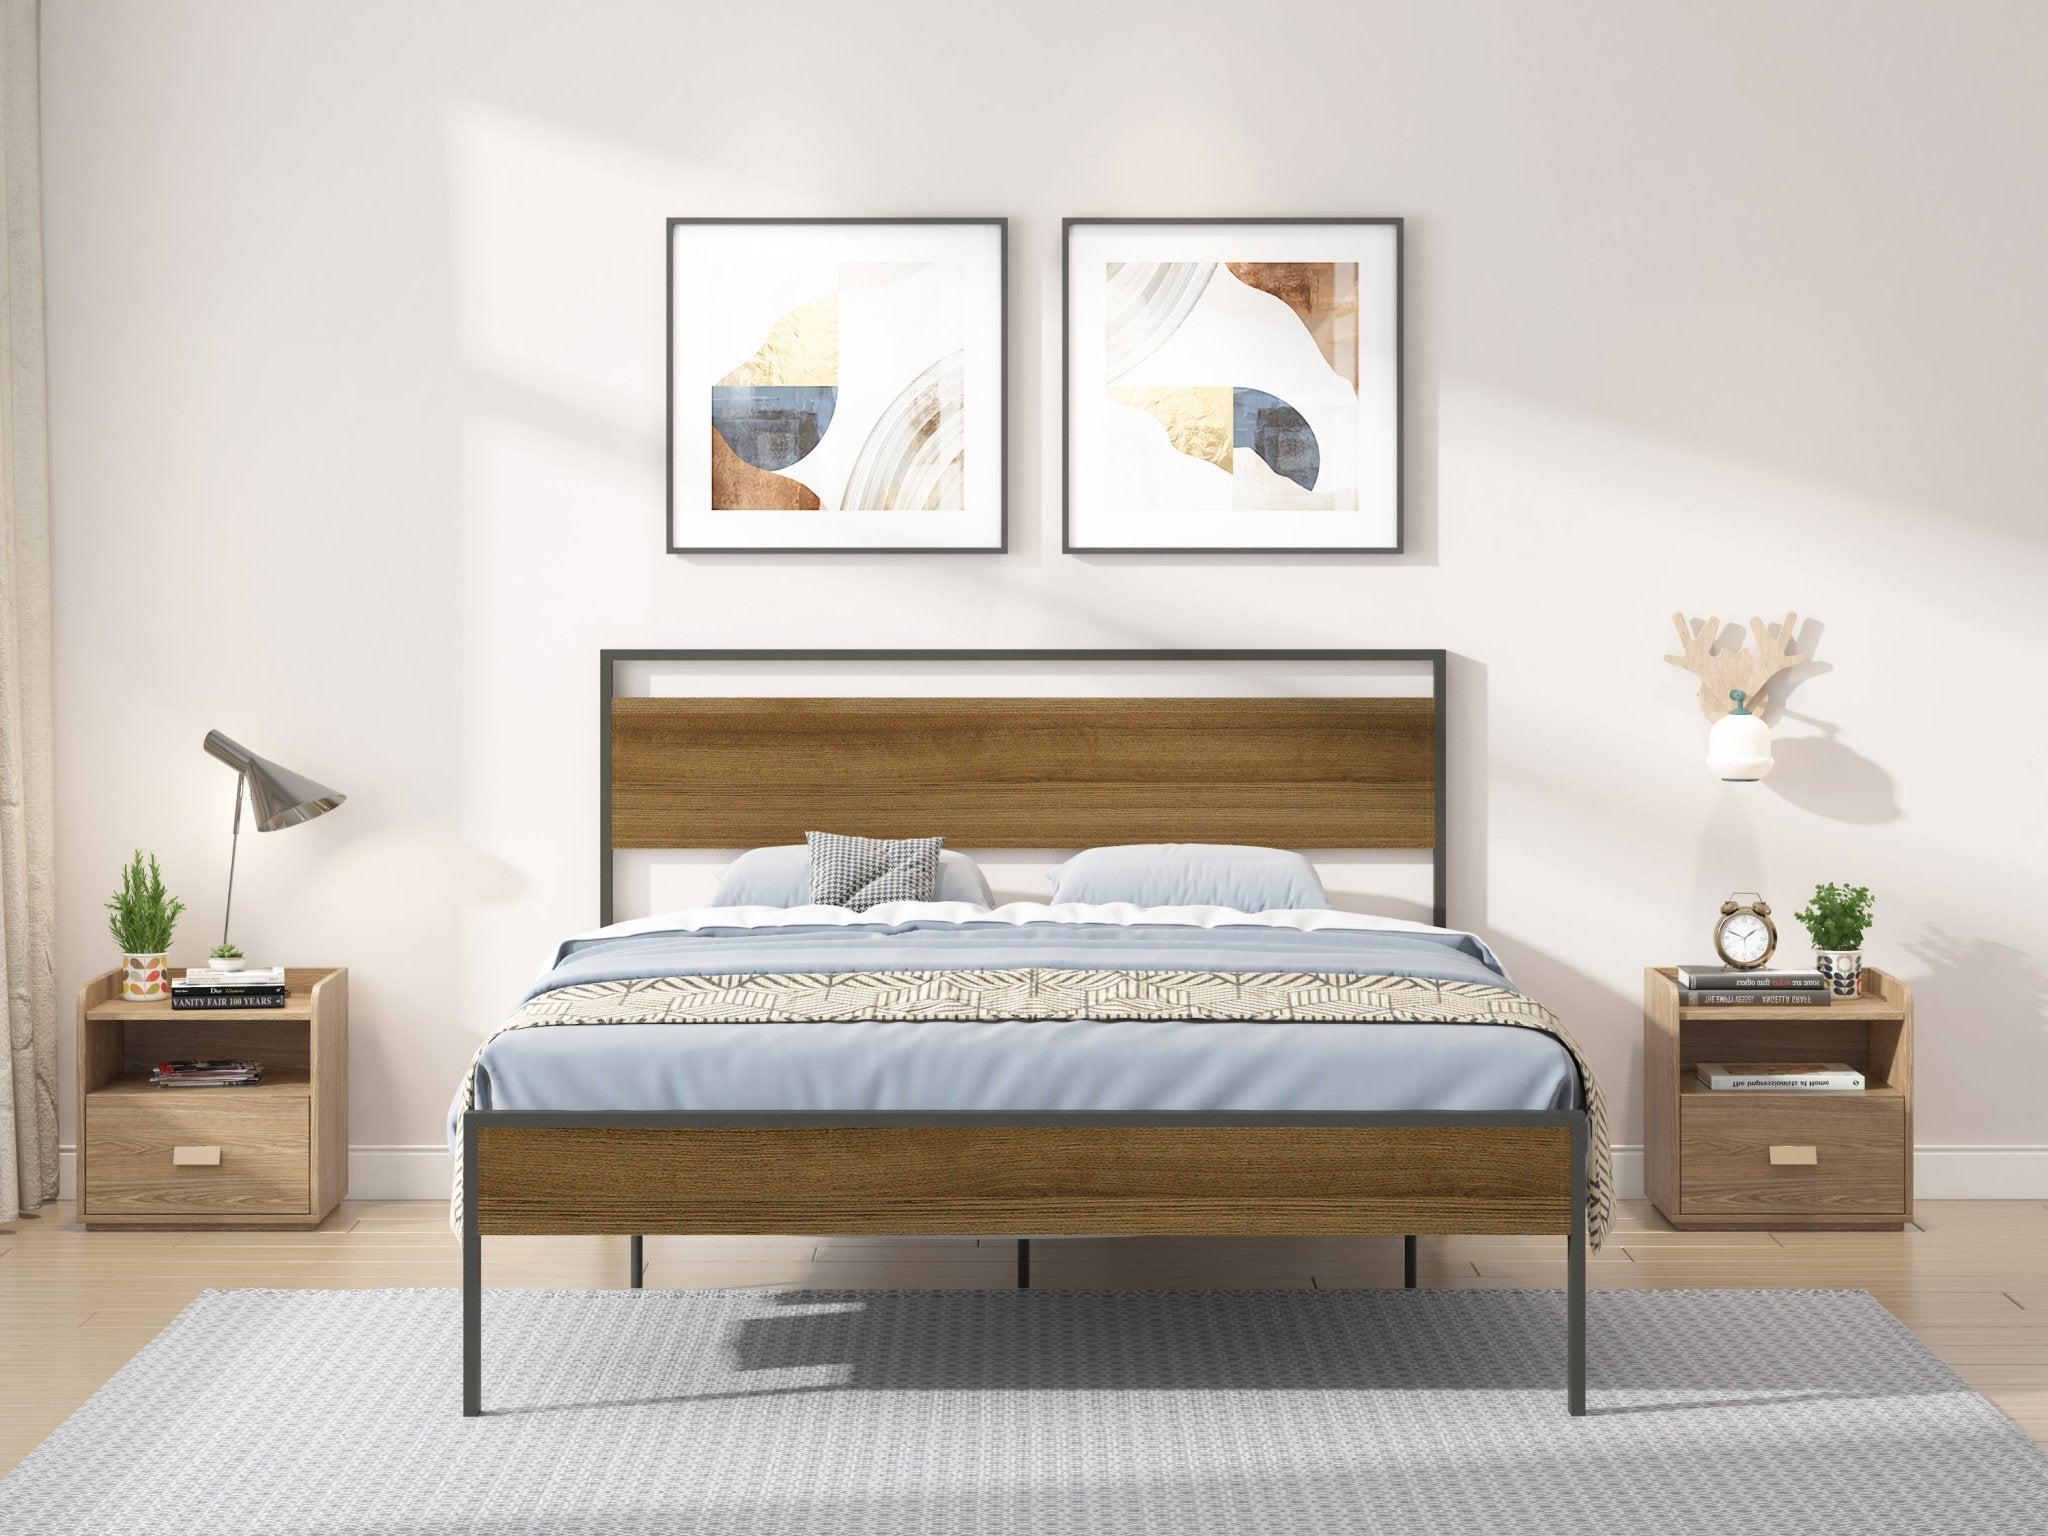 Ceres-Queen-Metal-Bed,-Black-with-Cinnamon-Wood-Headboard/footboard-Beds-&-Bed-Frames